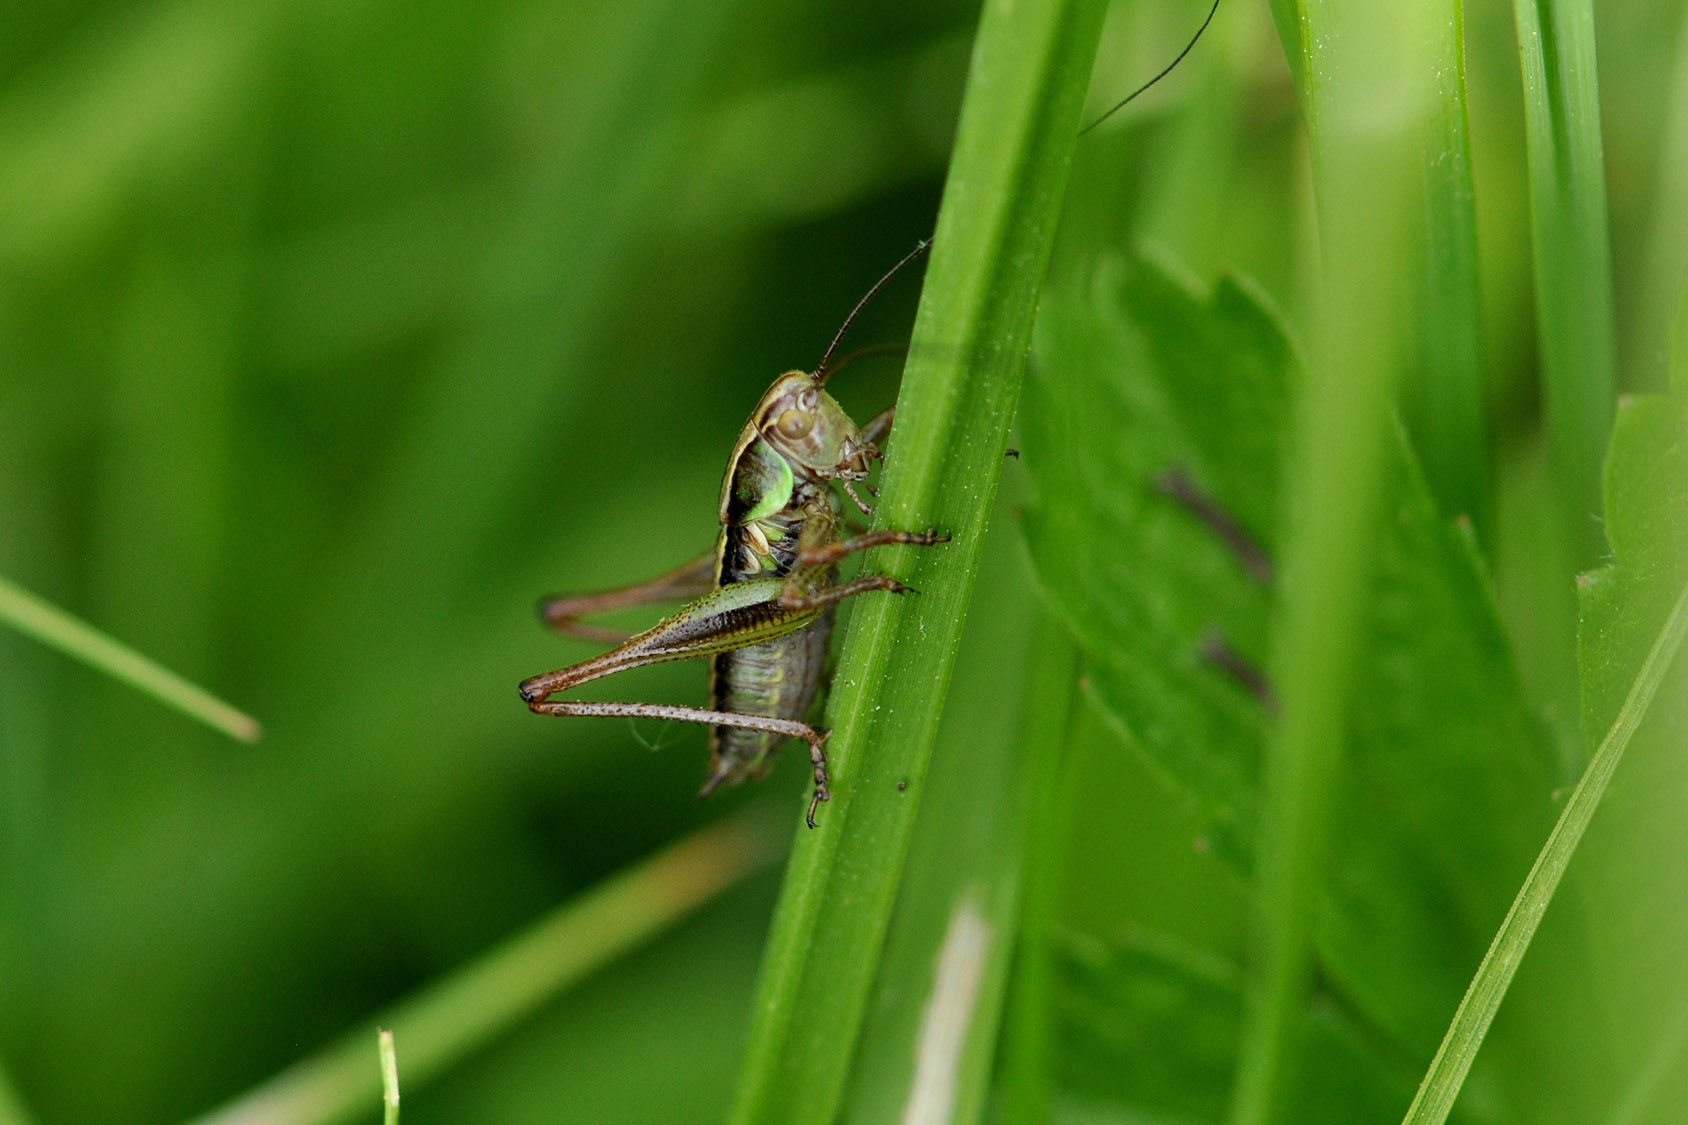 A cricket in long grass